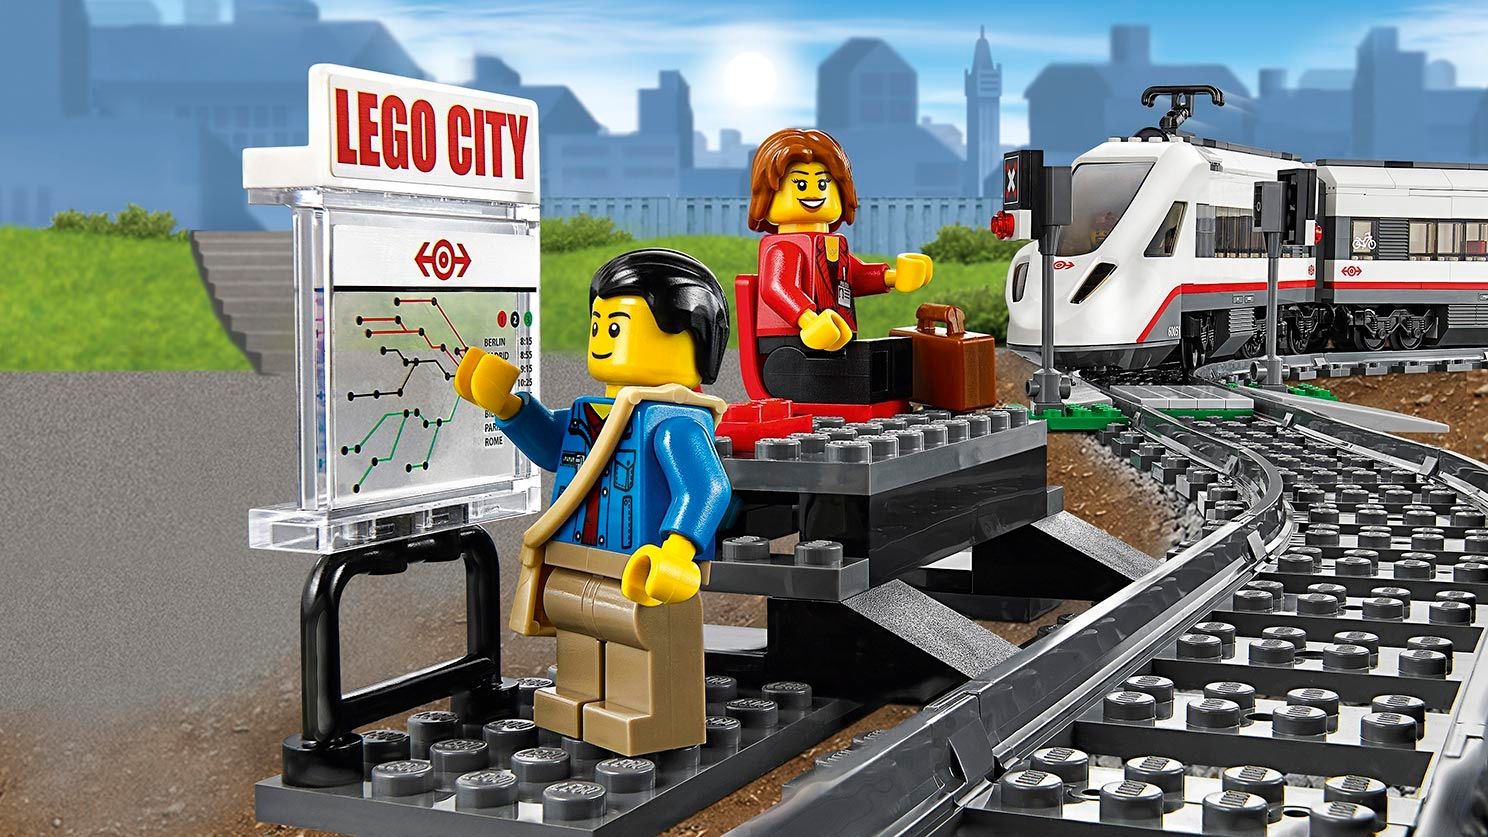 LEGO City 60051 Hochgeschwindigkeitszug LEGO_60051_PROD_DET02_1488.jpg